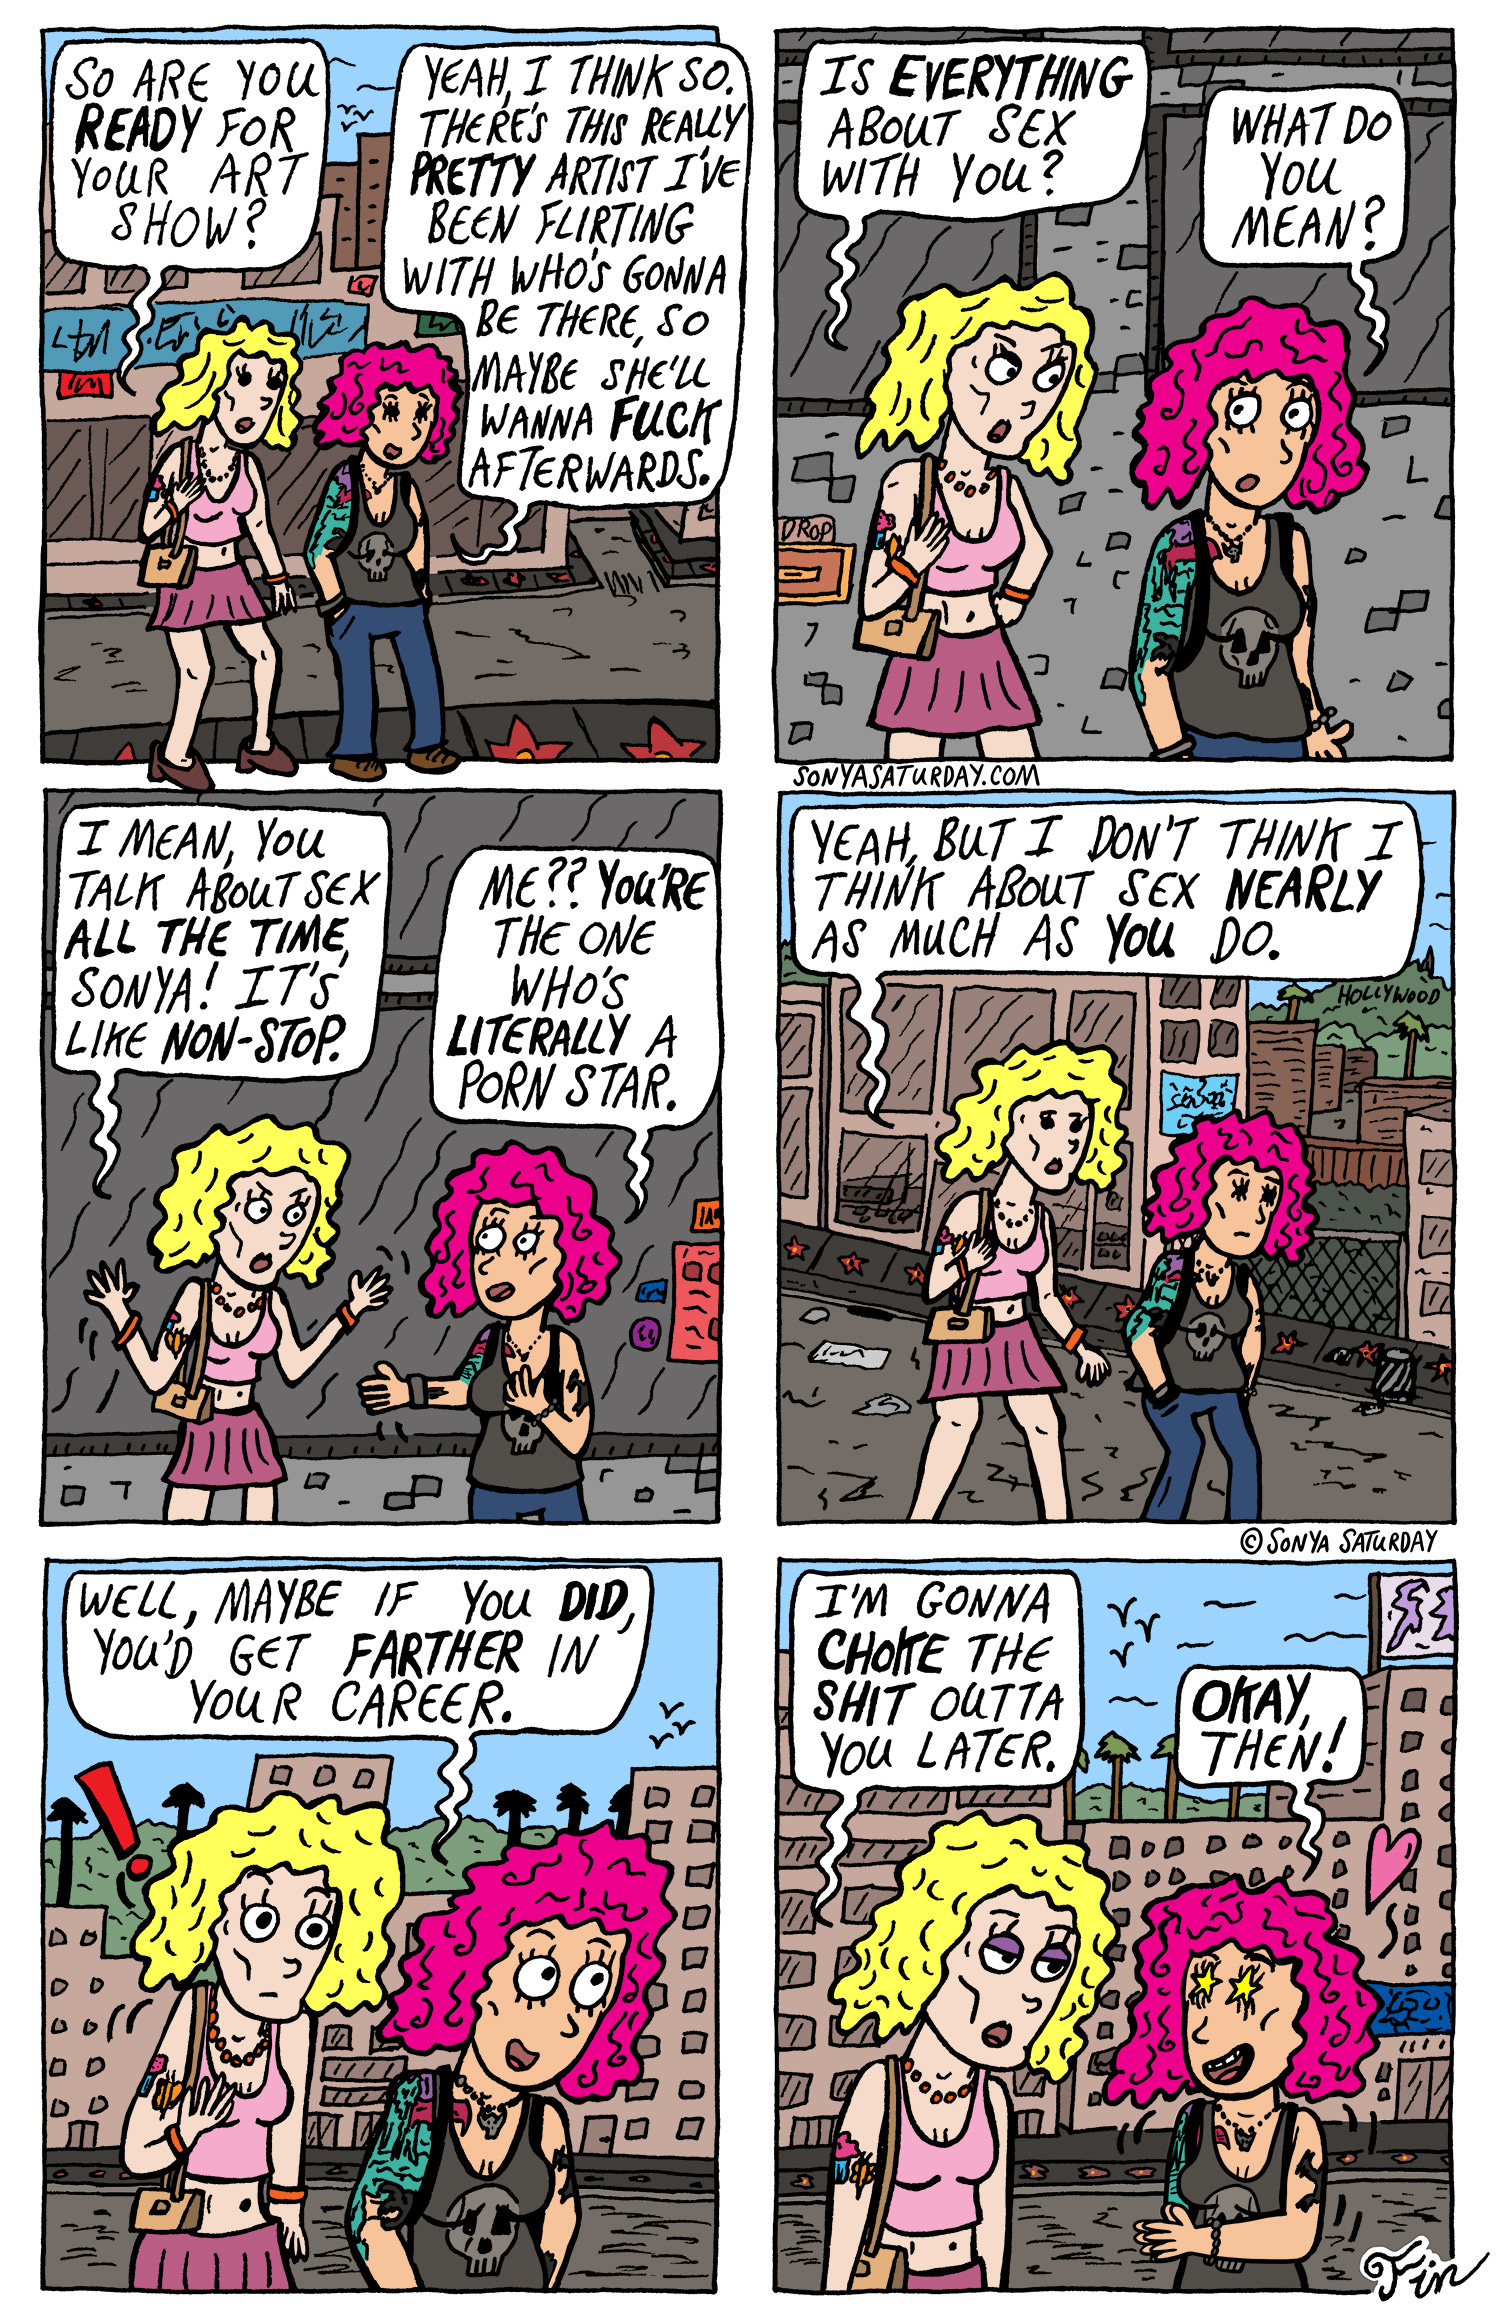 Comic strip about two women walking along Hollywood Blvd